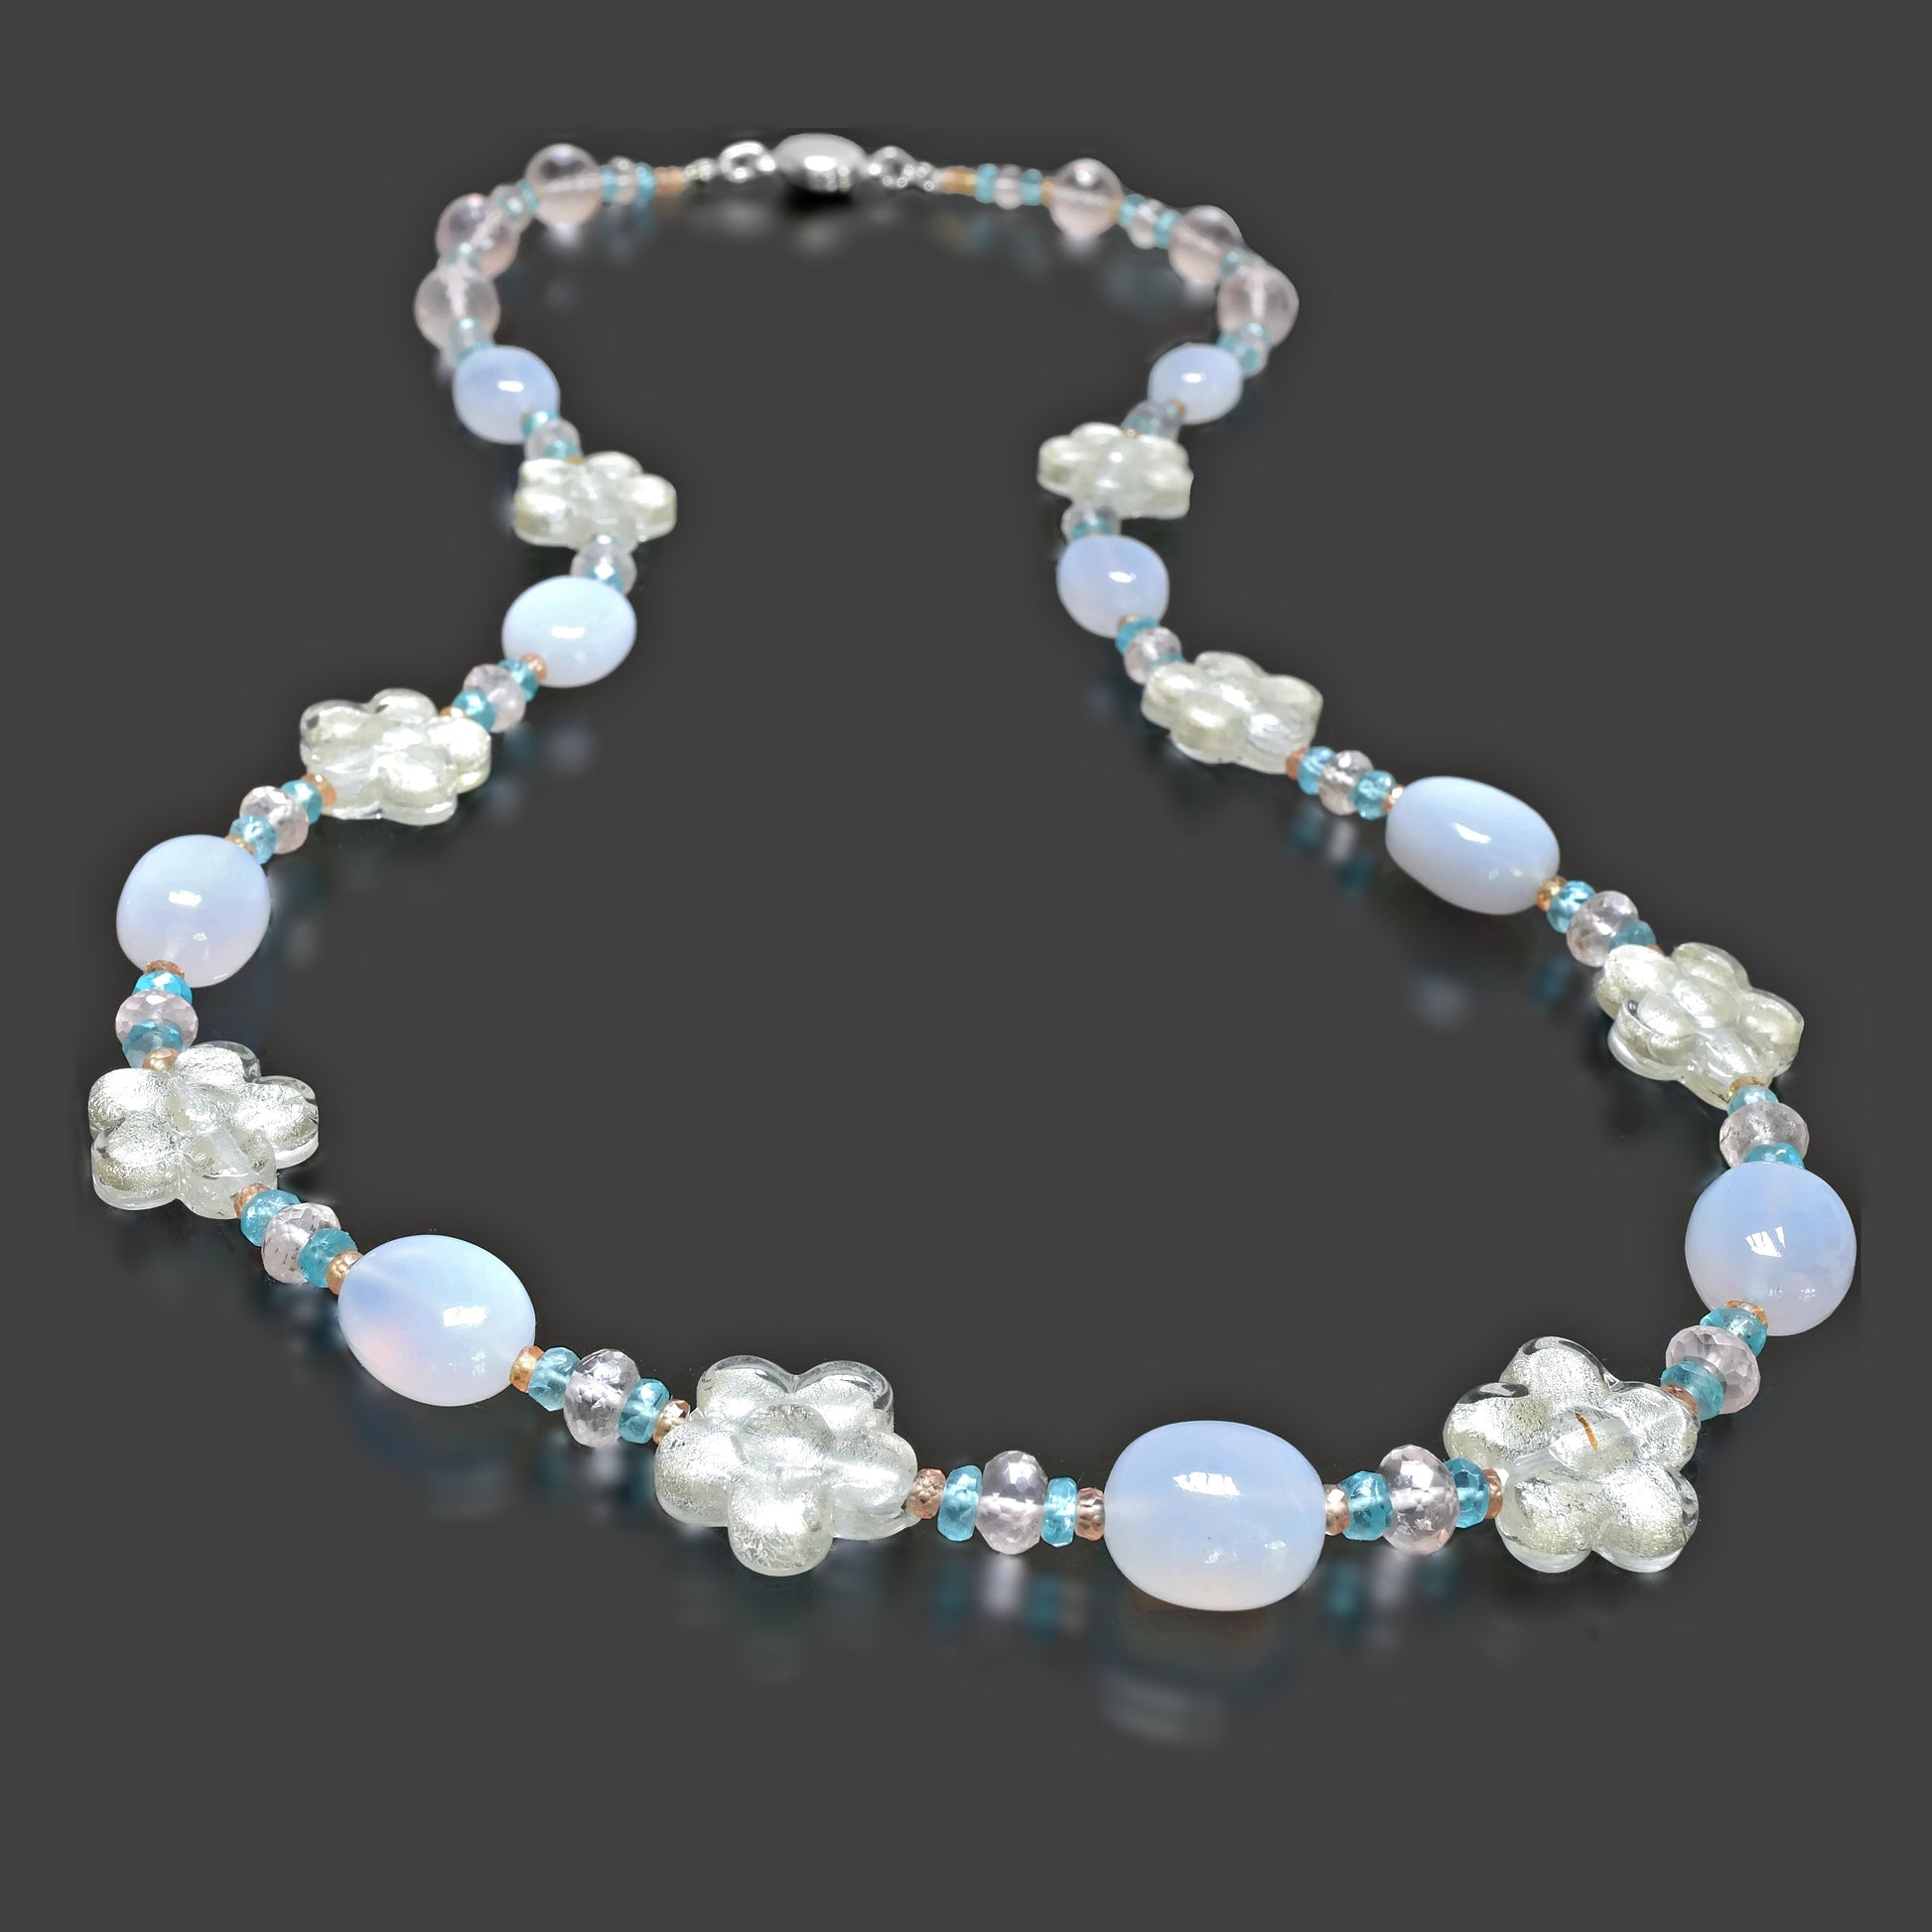 Floral Aqua Calcedony Murano Glass Necklace with Rose Quartz, Citrine & Apatite Sterling Silver 